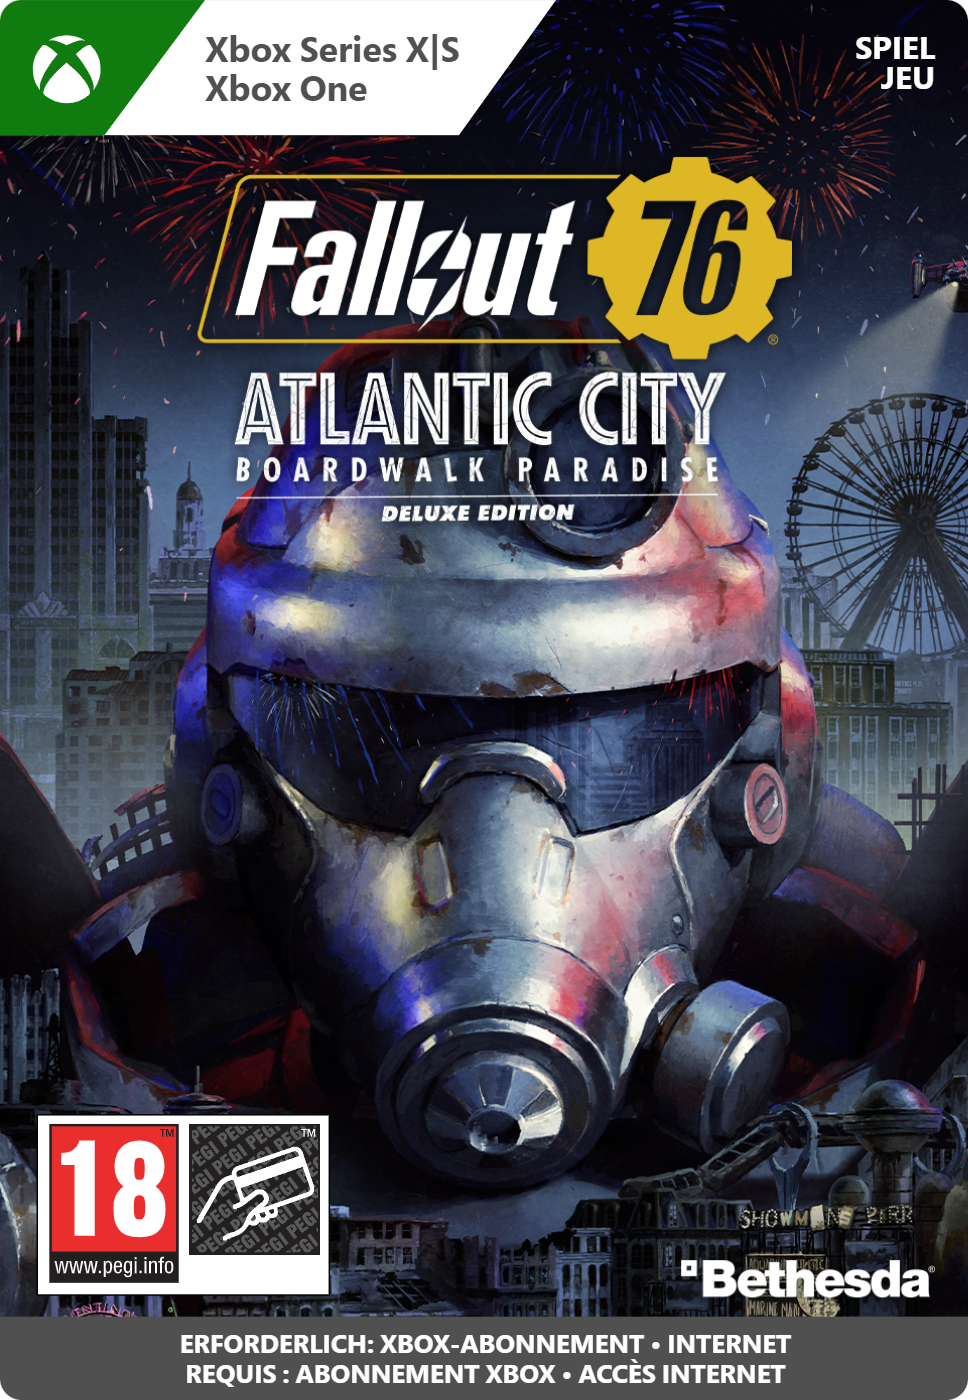 Xbox Fallout 76 Atlantic City - Boardwalk Paradise Deluxe Edition Game Download (Xbox) zum Sofortdownload